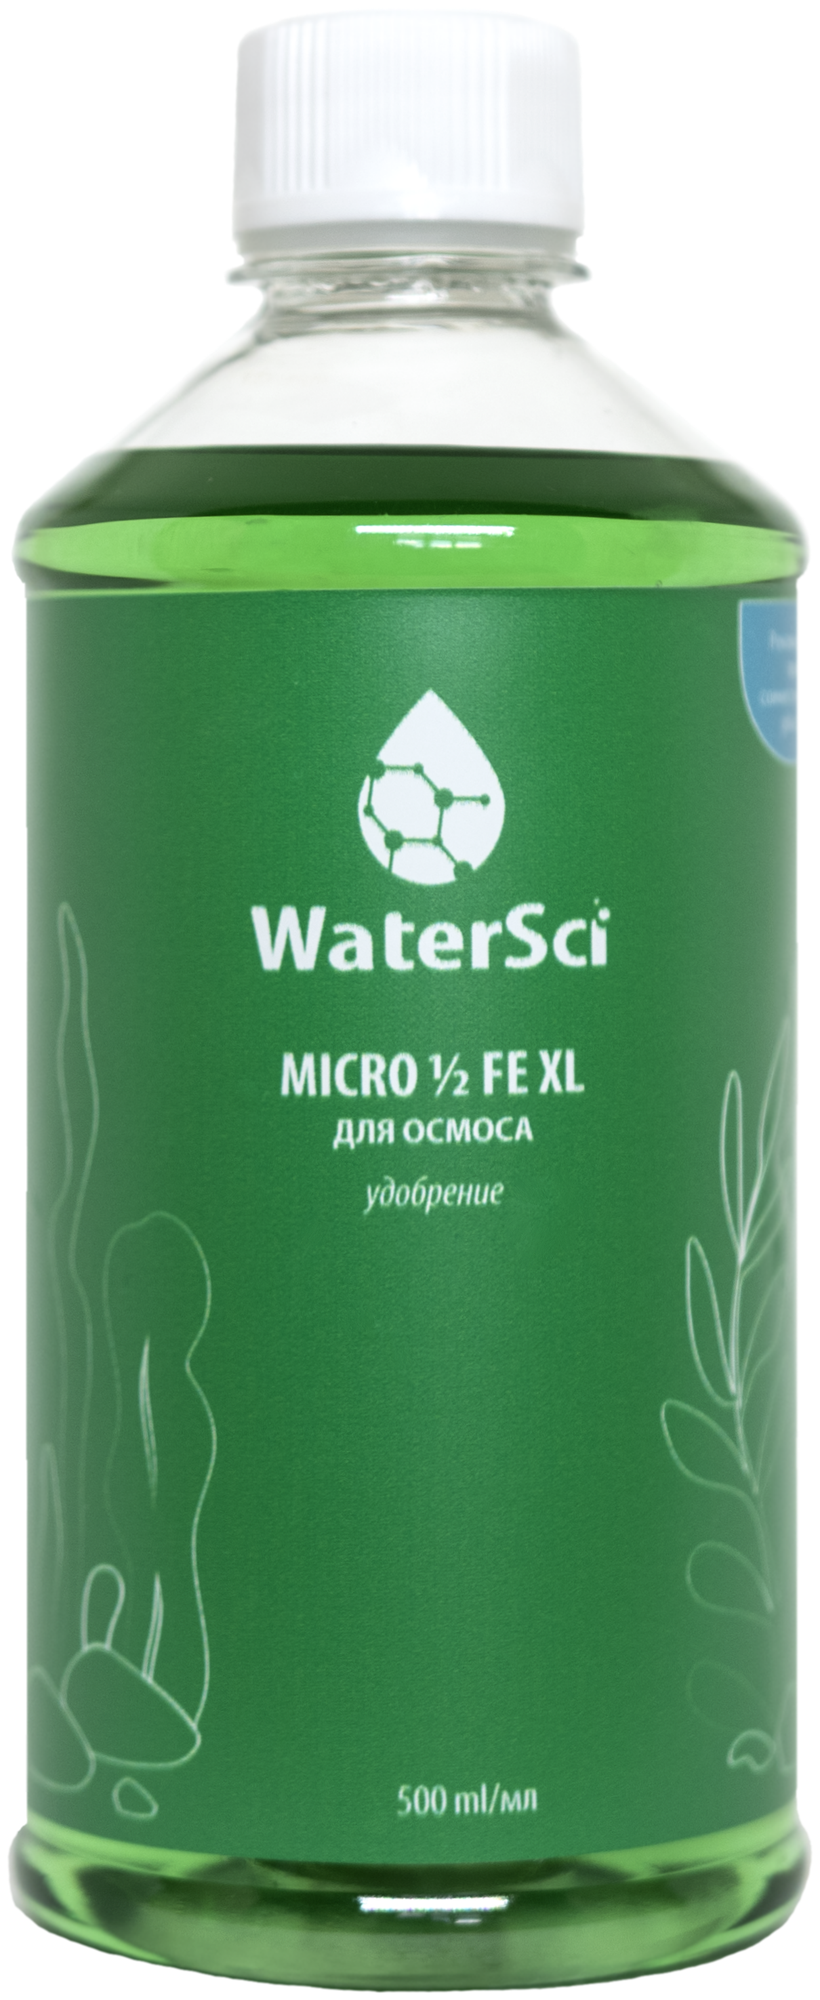 Микро для аквариума WaterSci. Micro 1/2 Fe XL, 500 мл